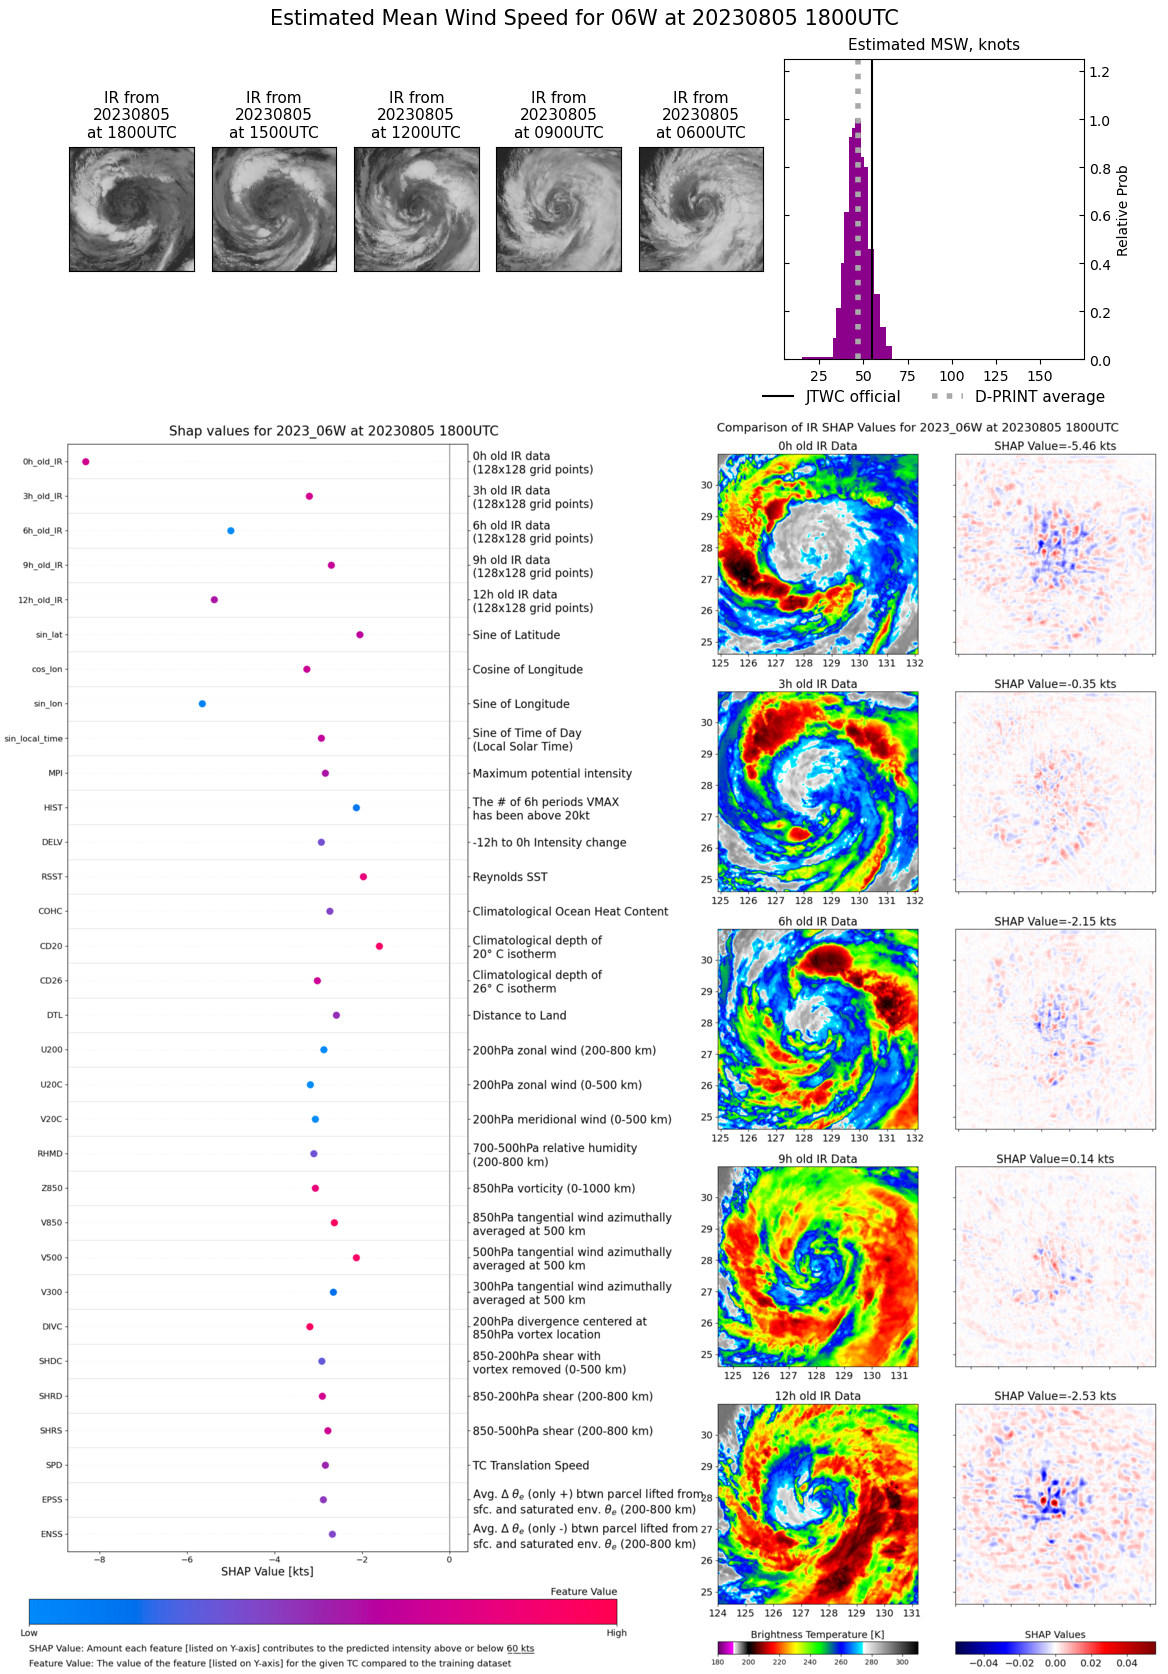 06W(KHANUN)to approach KYUSHU by 48/72H at Typhoon intensity//05E(DORA) powerful CAT 4 US//06E(EUGENE) intensifying//0521utc